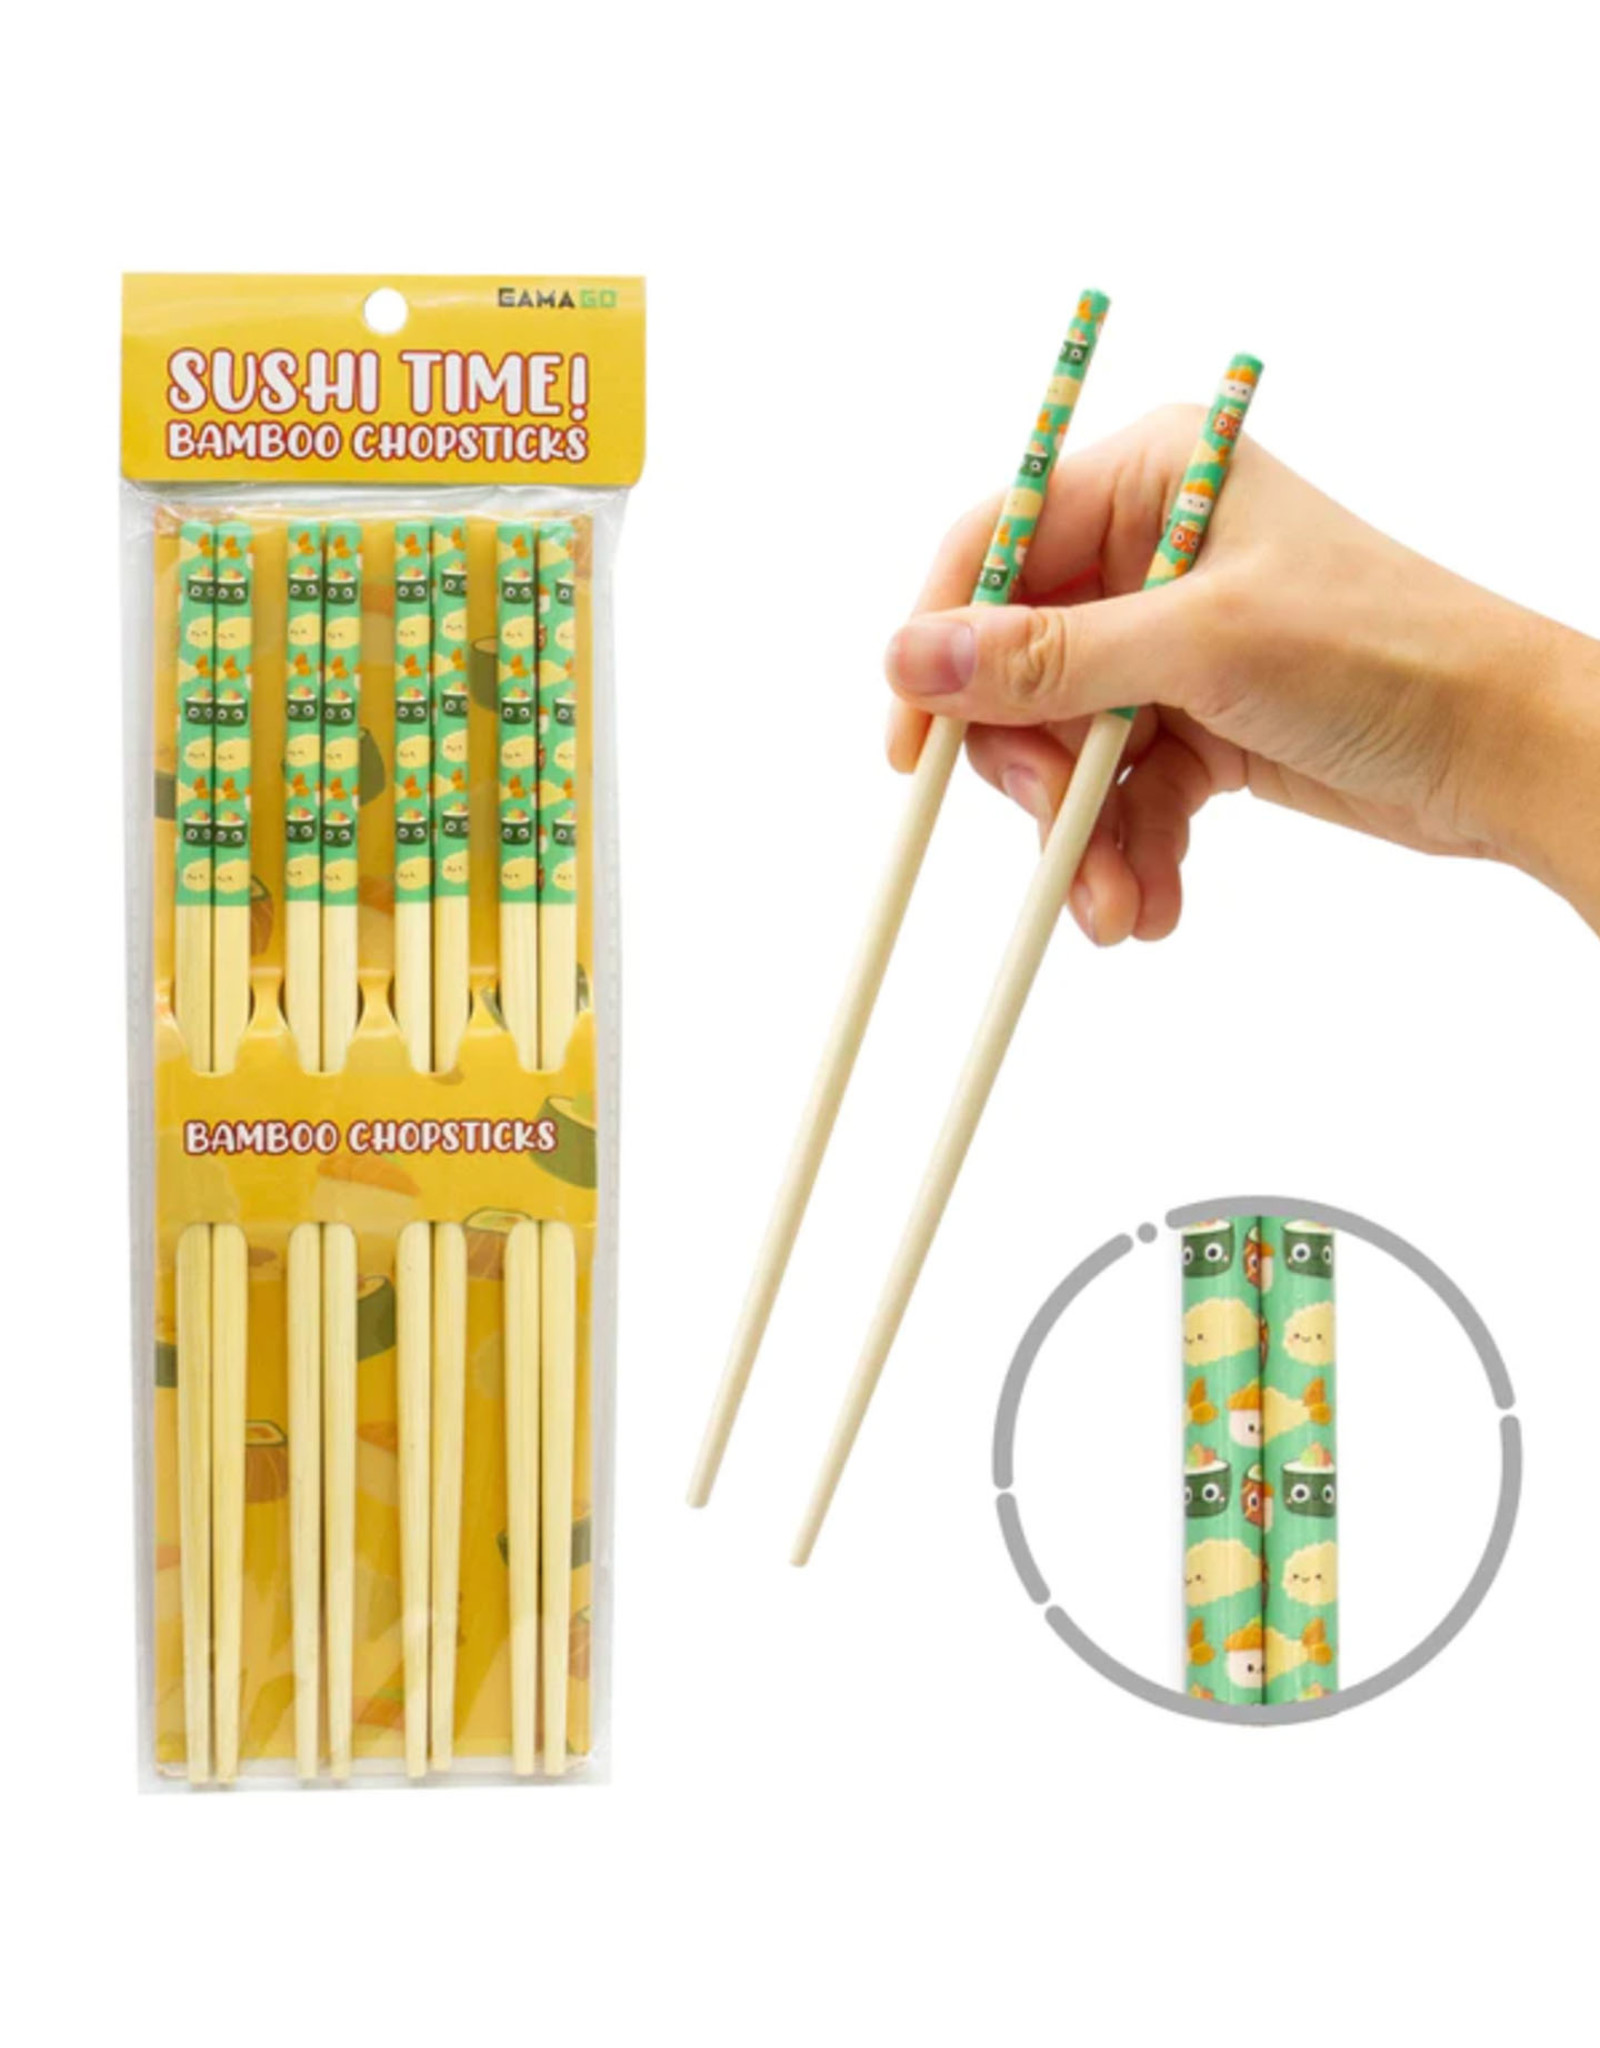 Sushi Time Chopsticks